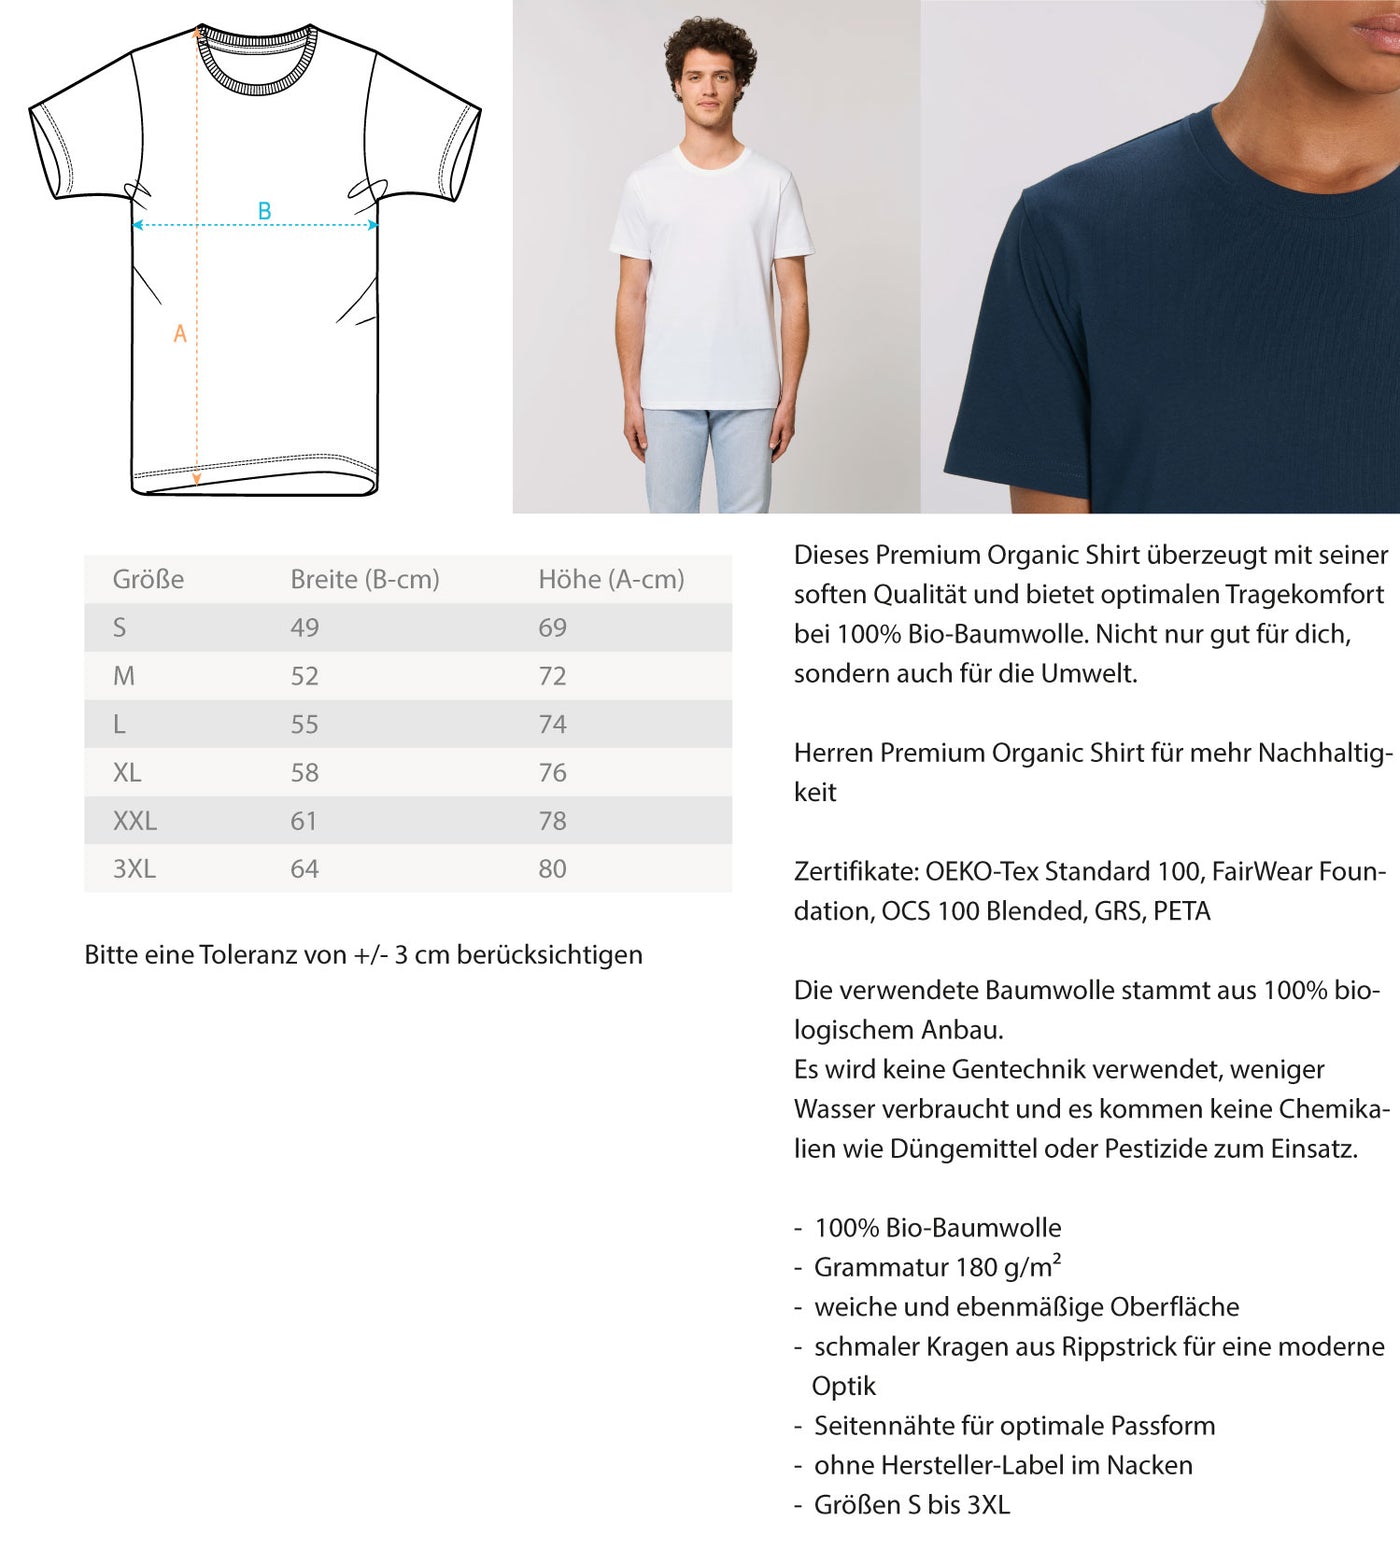 Wintersporteln - Herren Premium Organic T-Shirt